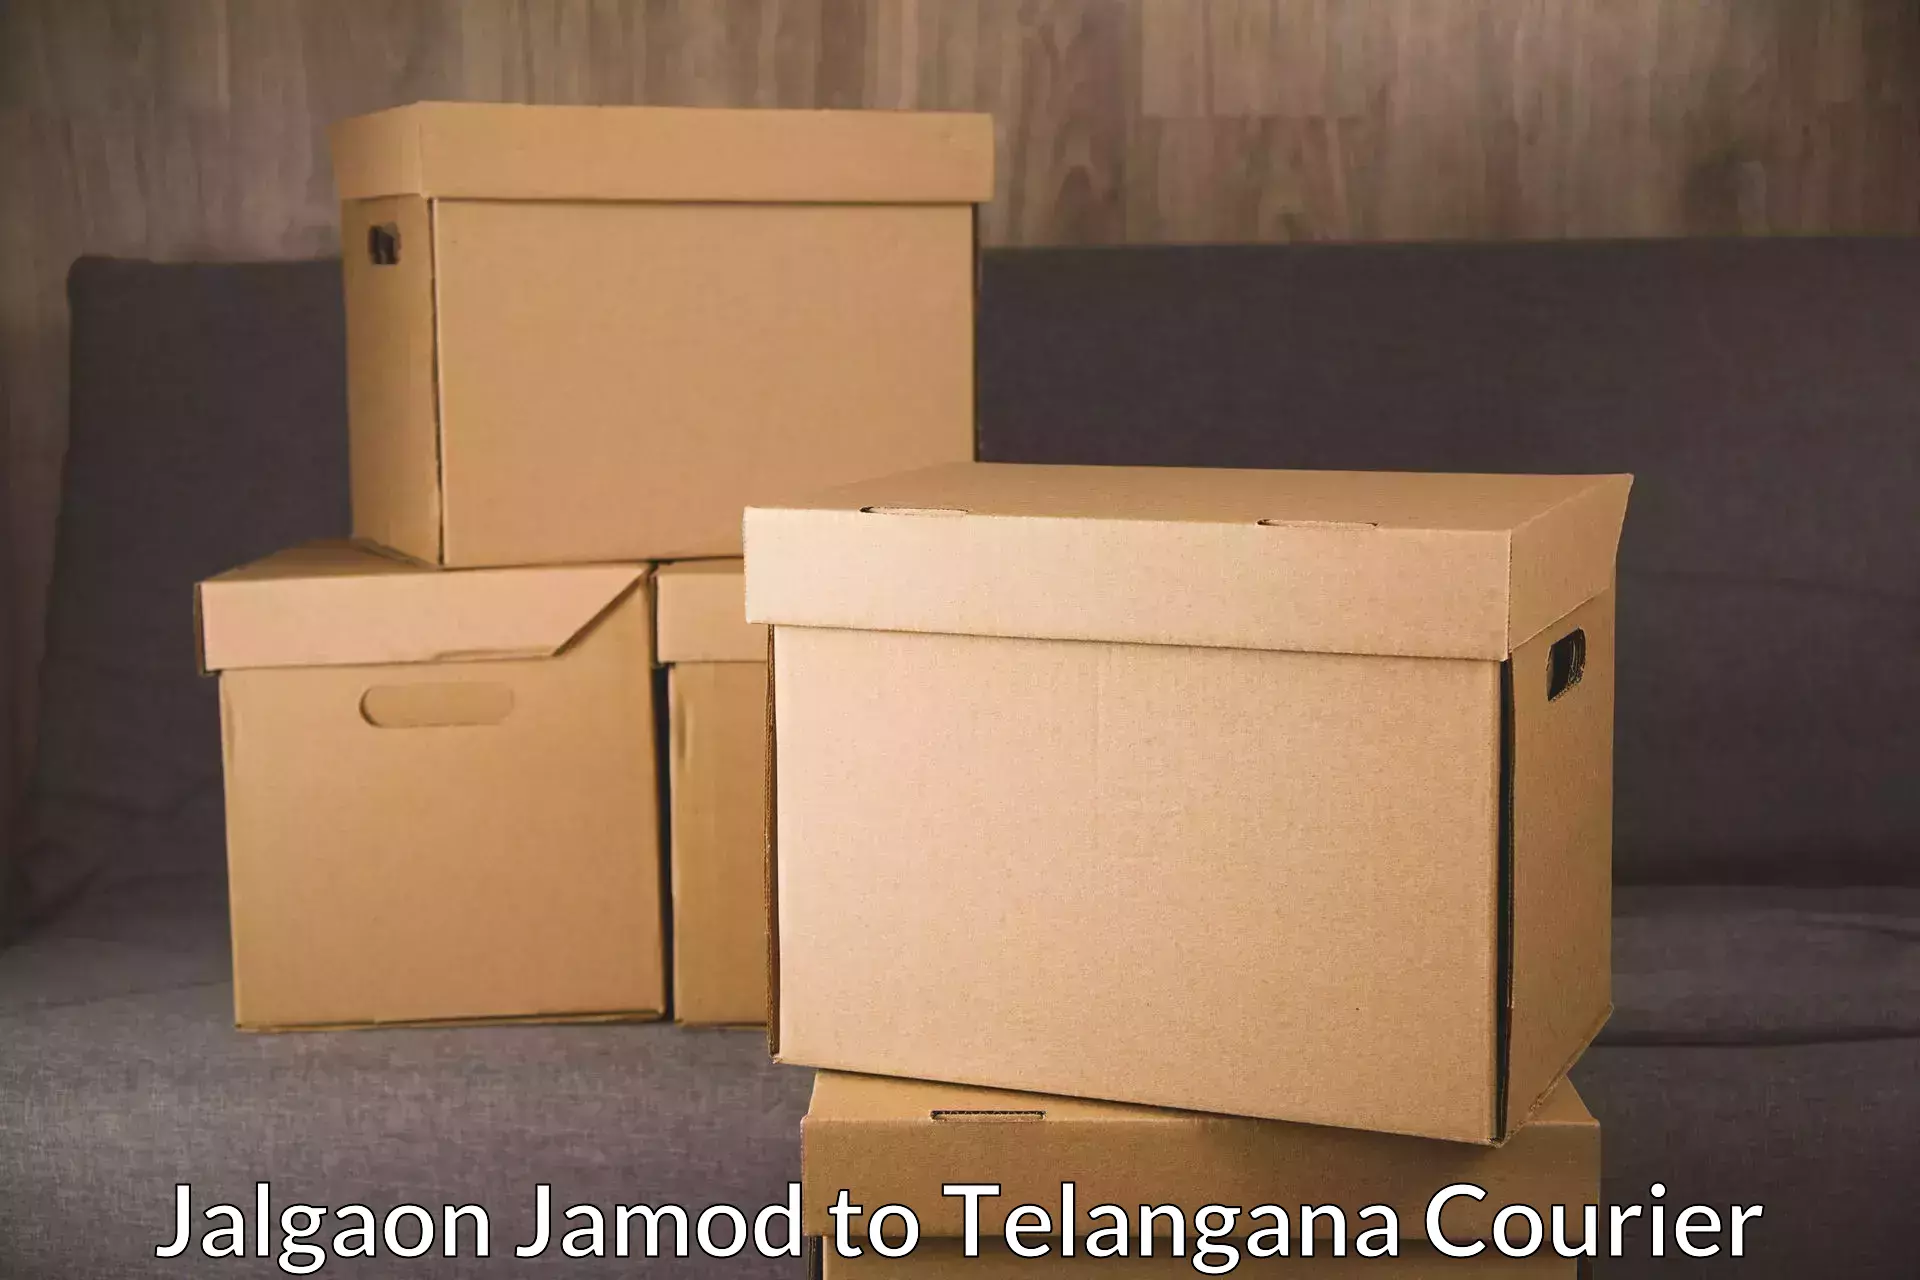 Expedited parcel delivery Jalgaon Jamod to Secunderabad